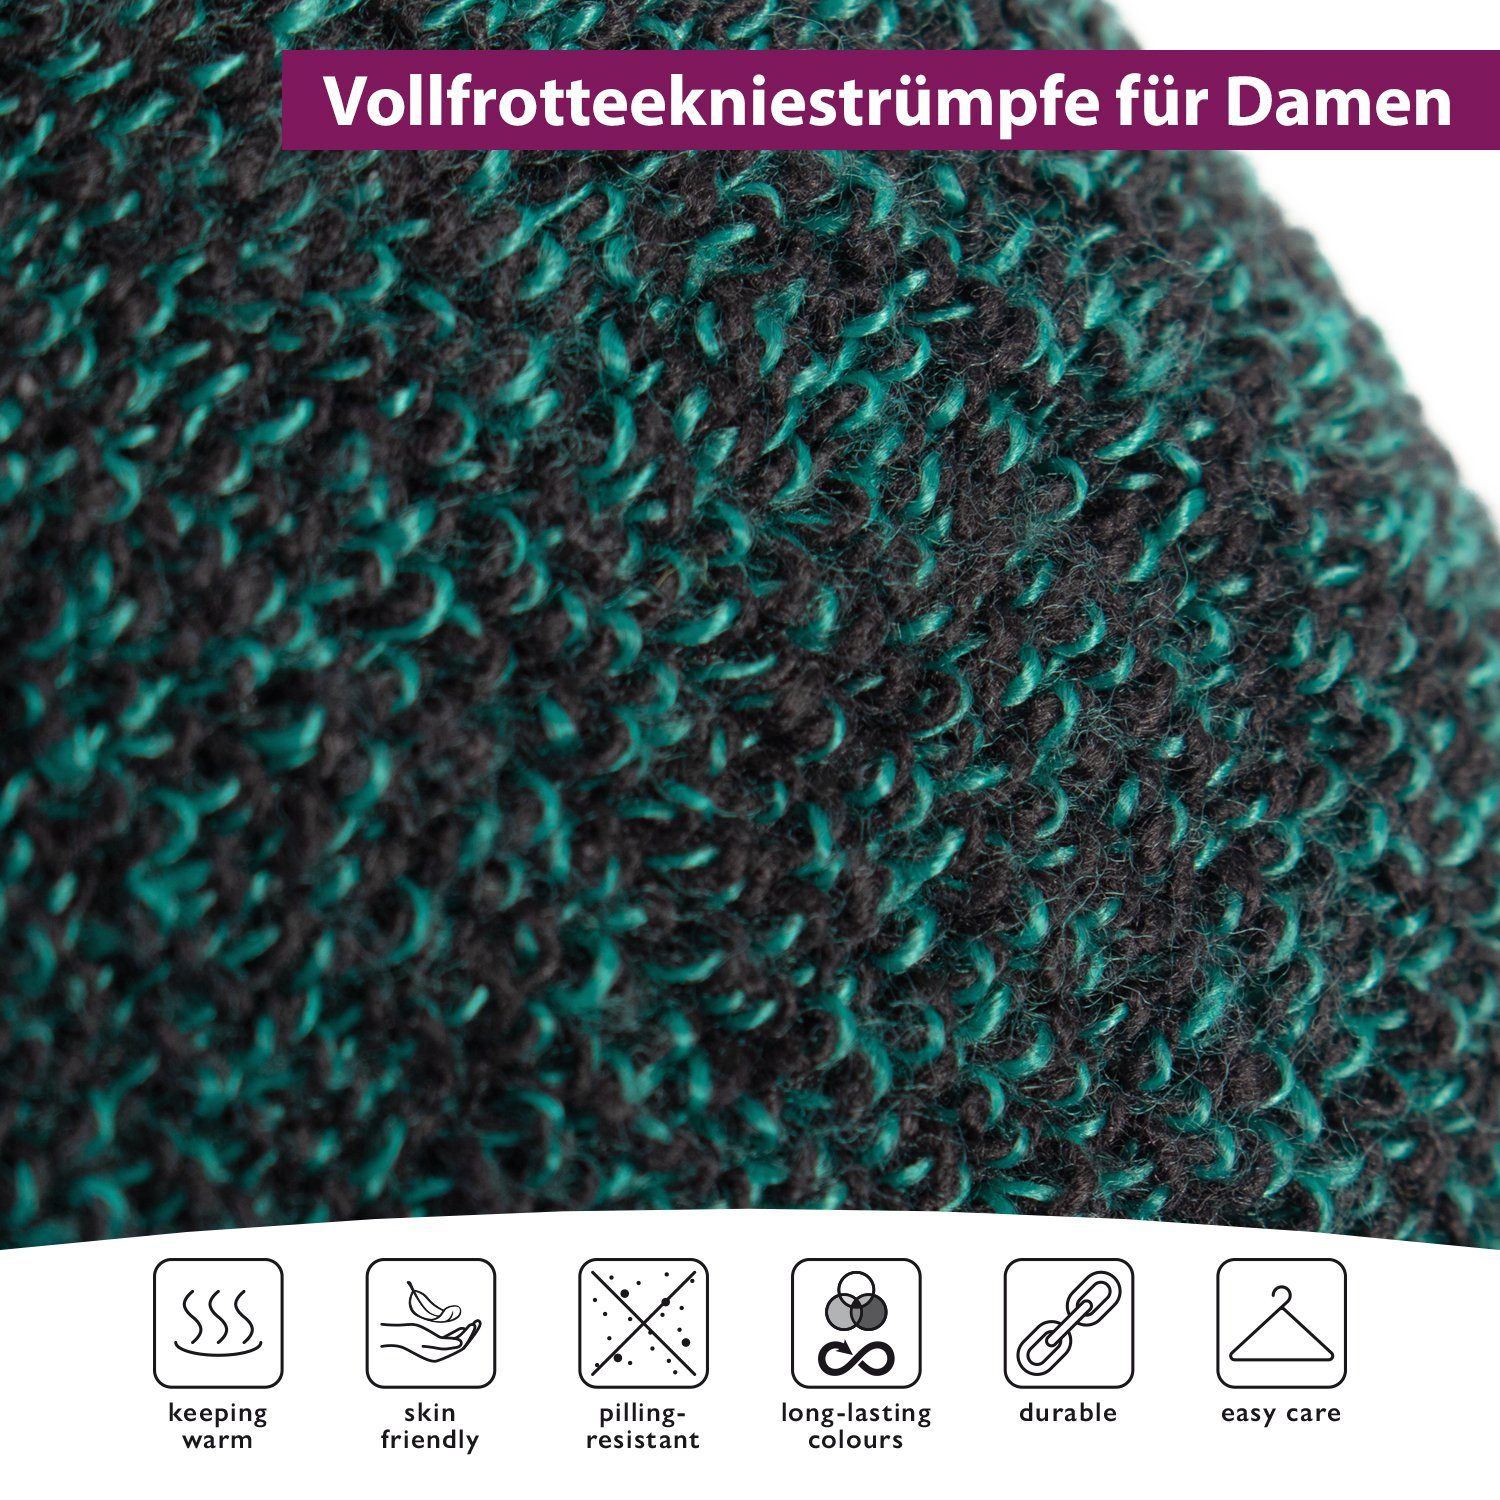 Damen Footstar Thermosocken Grau-Rot Baumwolle, 2er Thermo (2/4 Paar), Frottee Kniestrümpfe